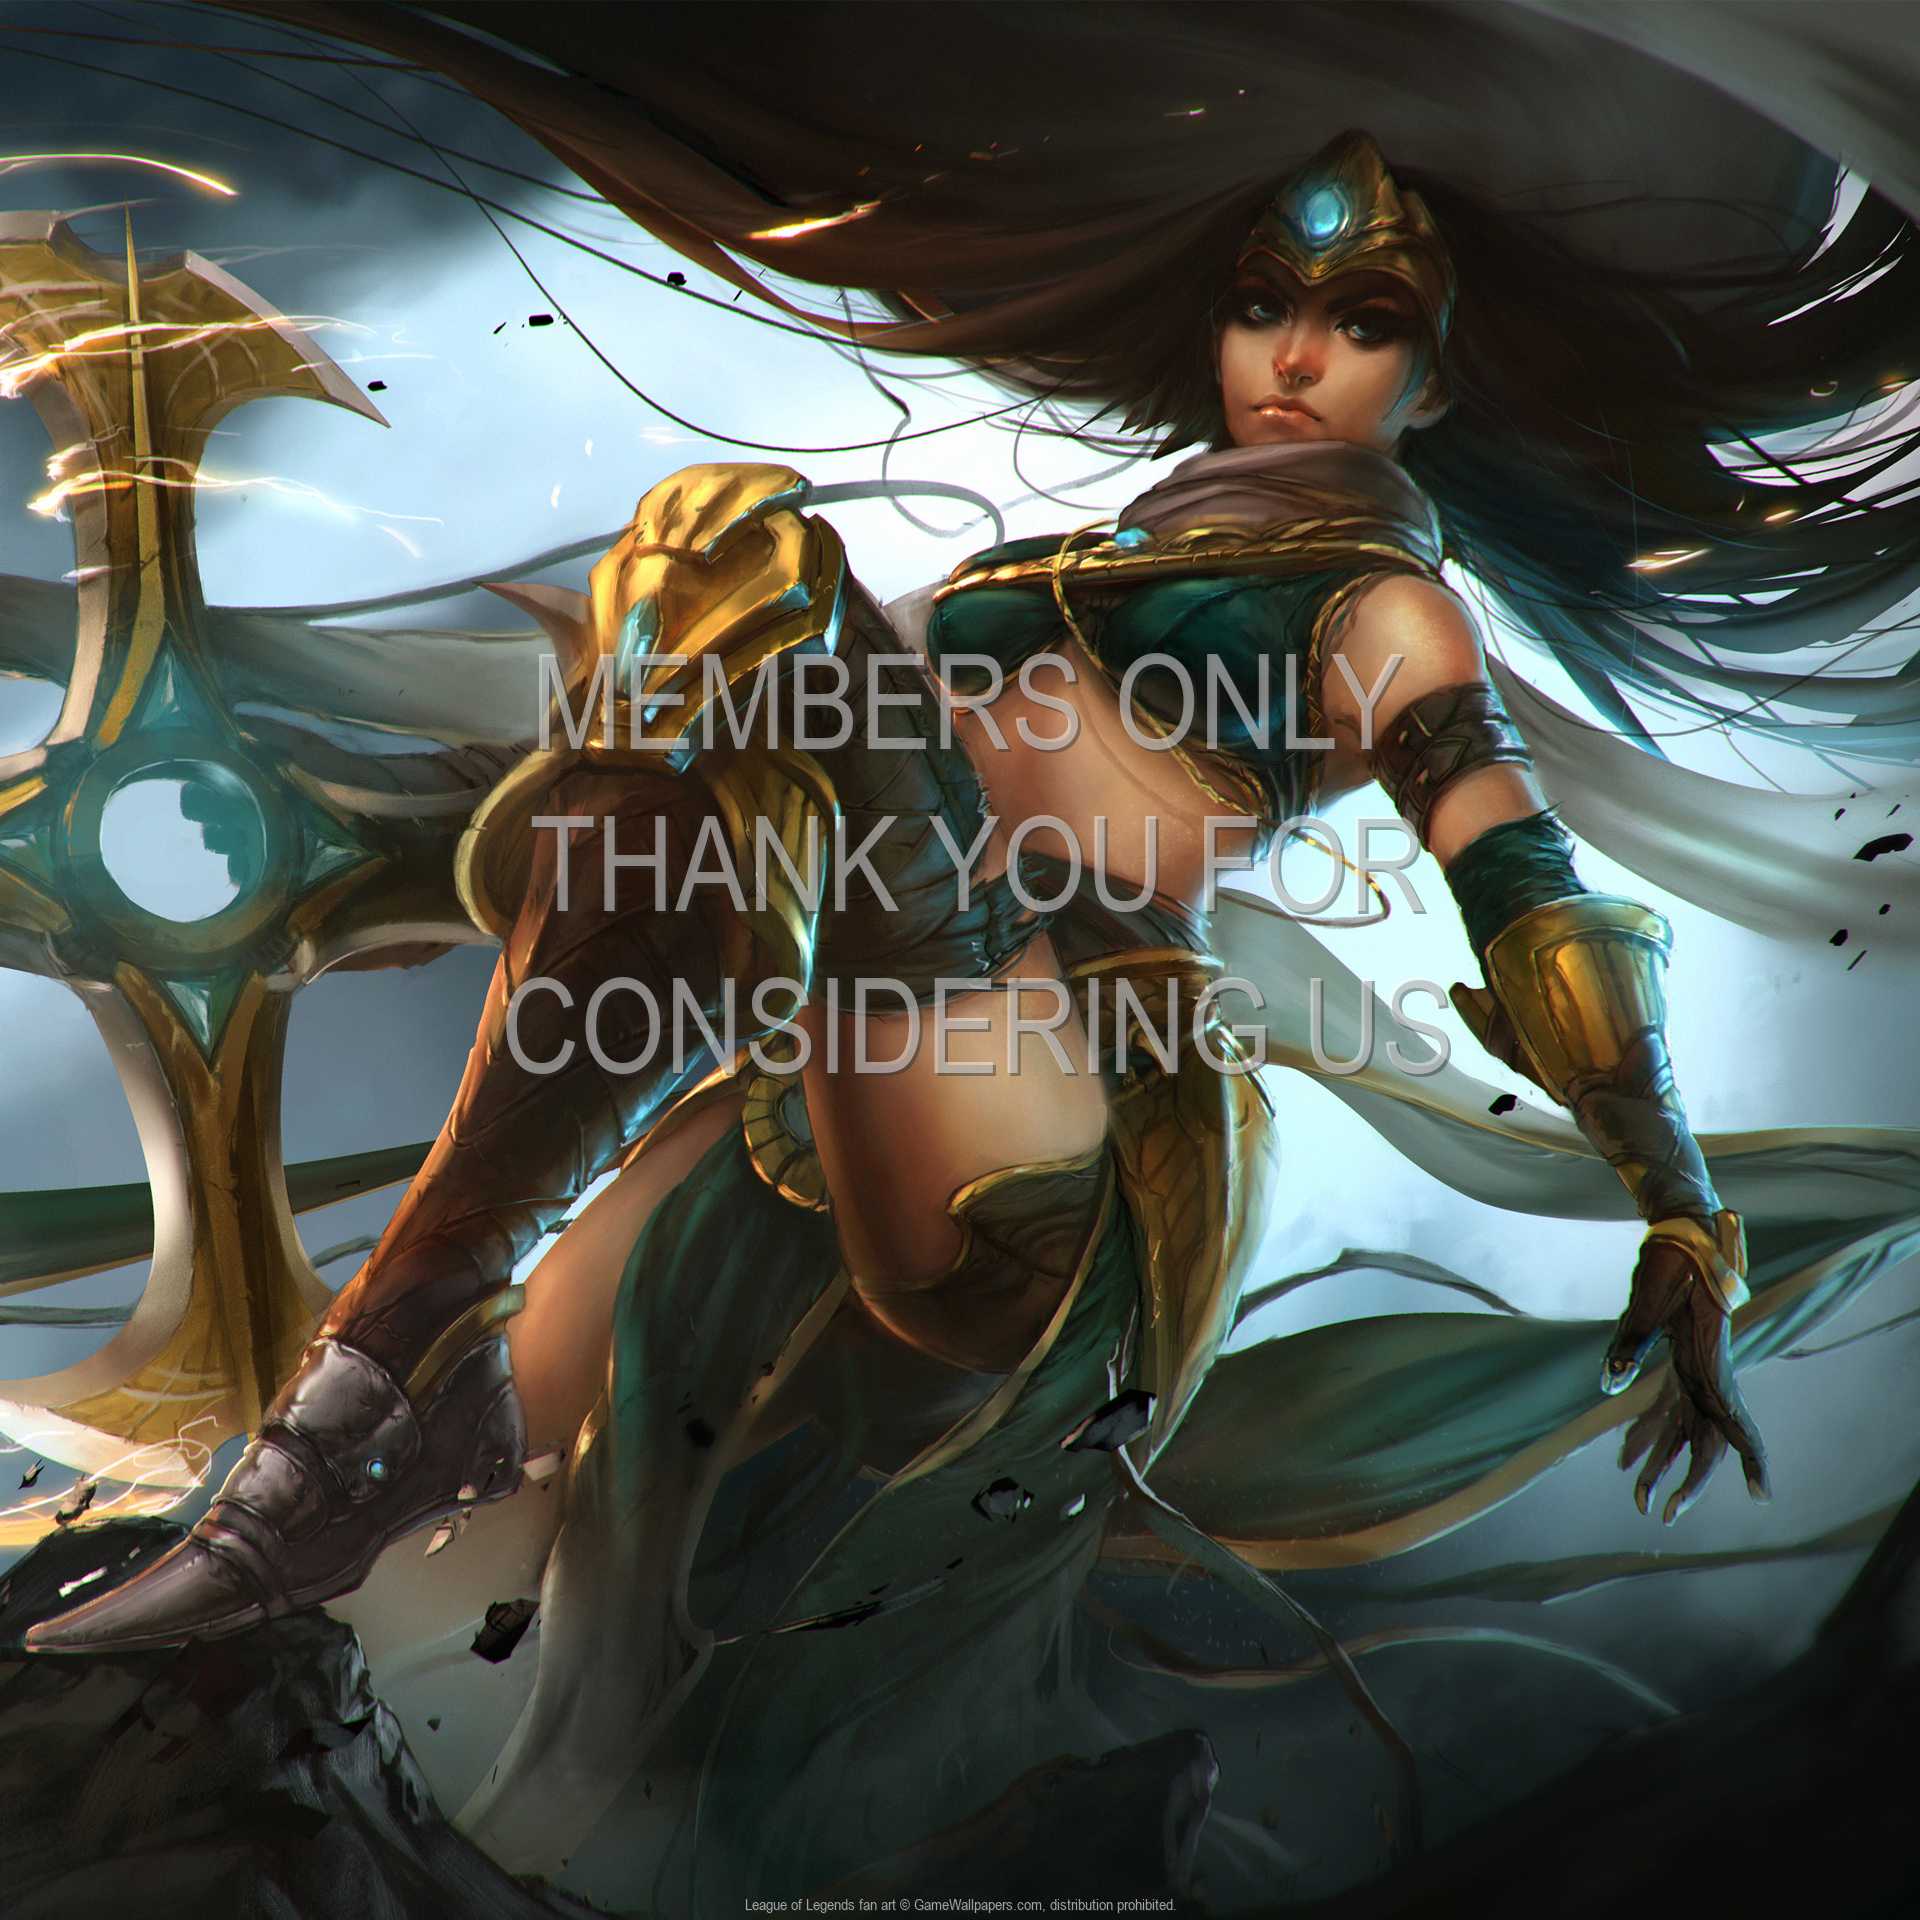 League of Legends fan art 1080p%20Horizontal Mobile wallpaper or background 04